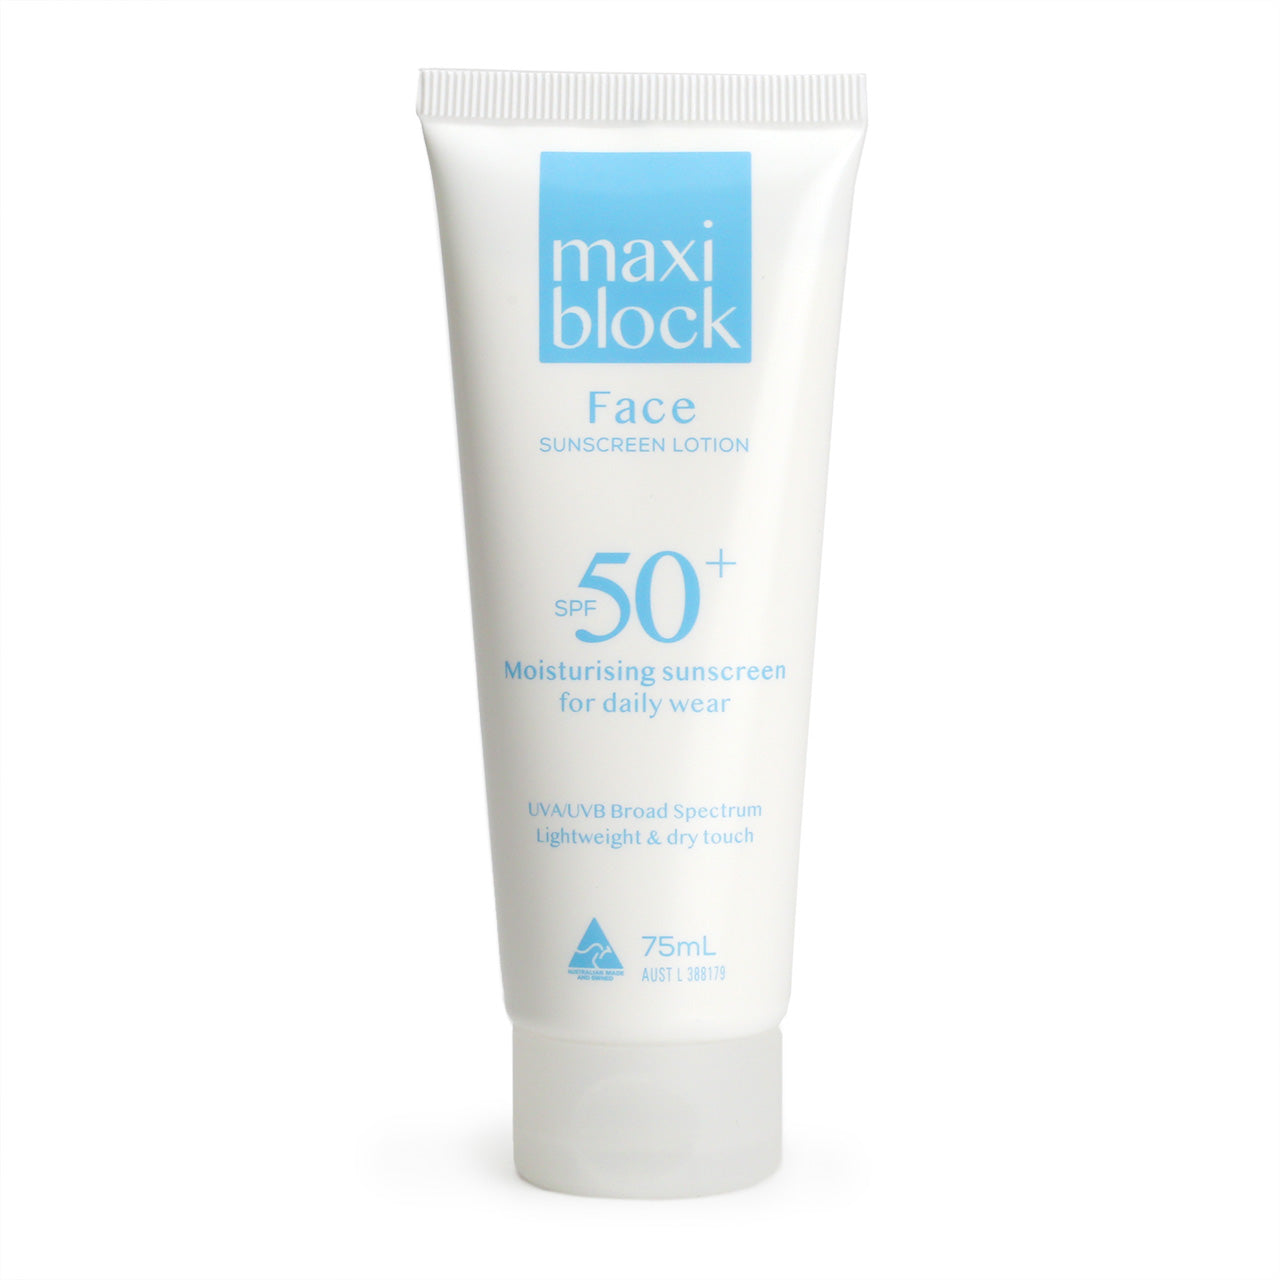 Maxiblock Face Sunscreen Lotion in white tube 75ml